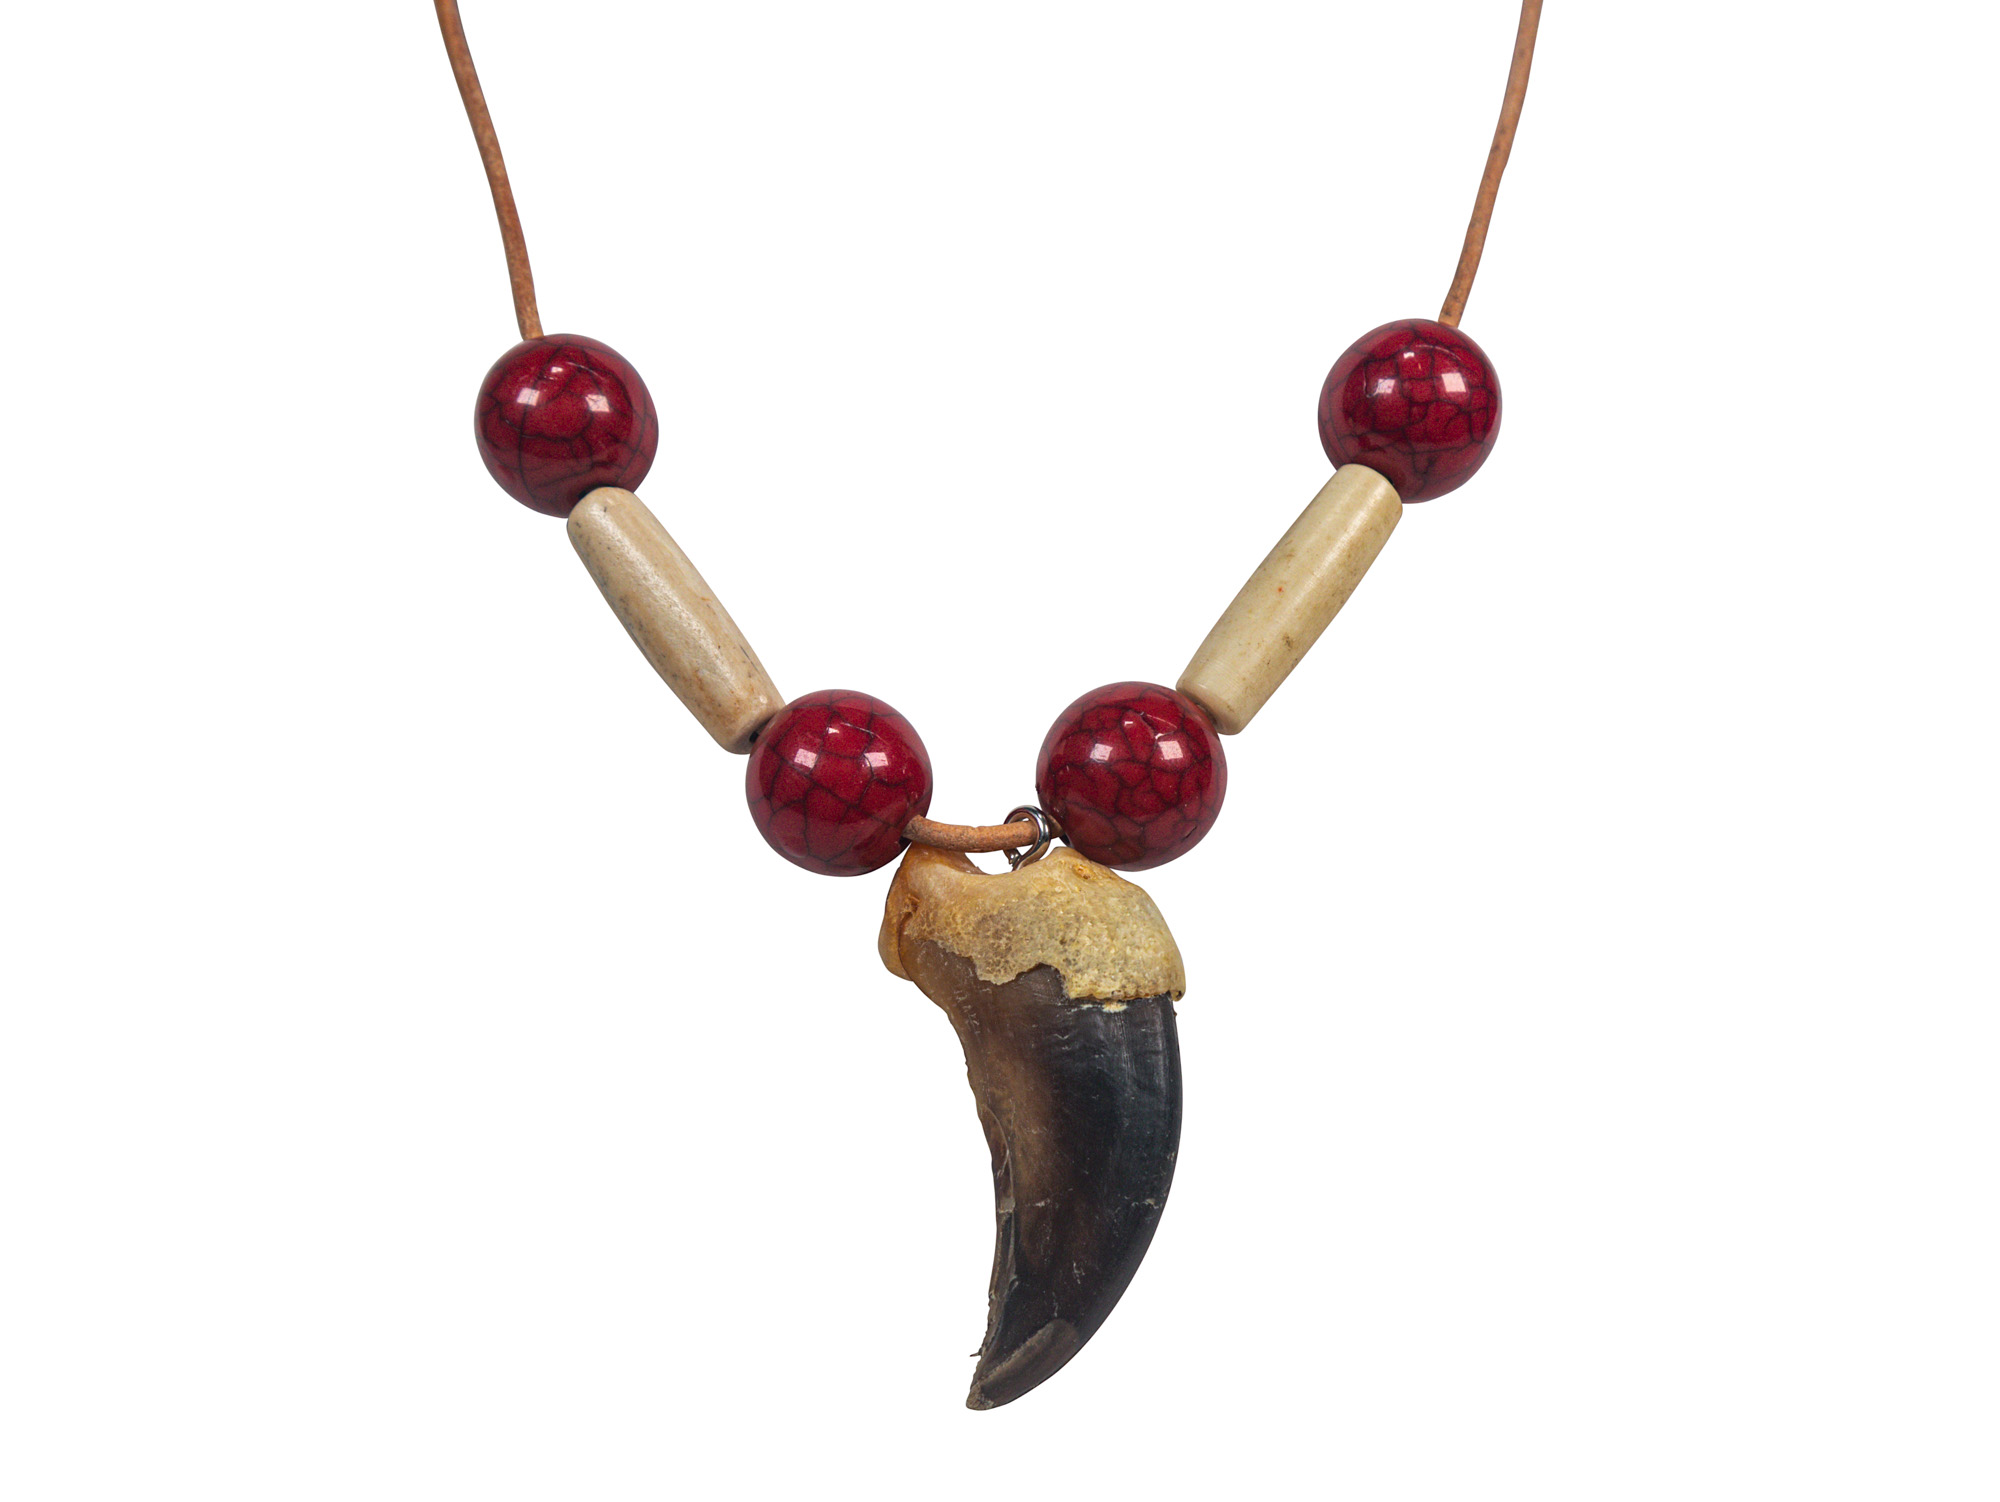 Indian style BEAR CLAW replica NECKLACE Jewelry Pendant - Wild Animal CLAW  | eBay